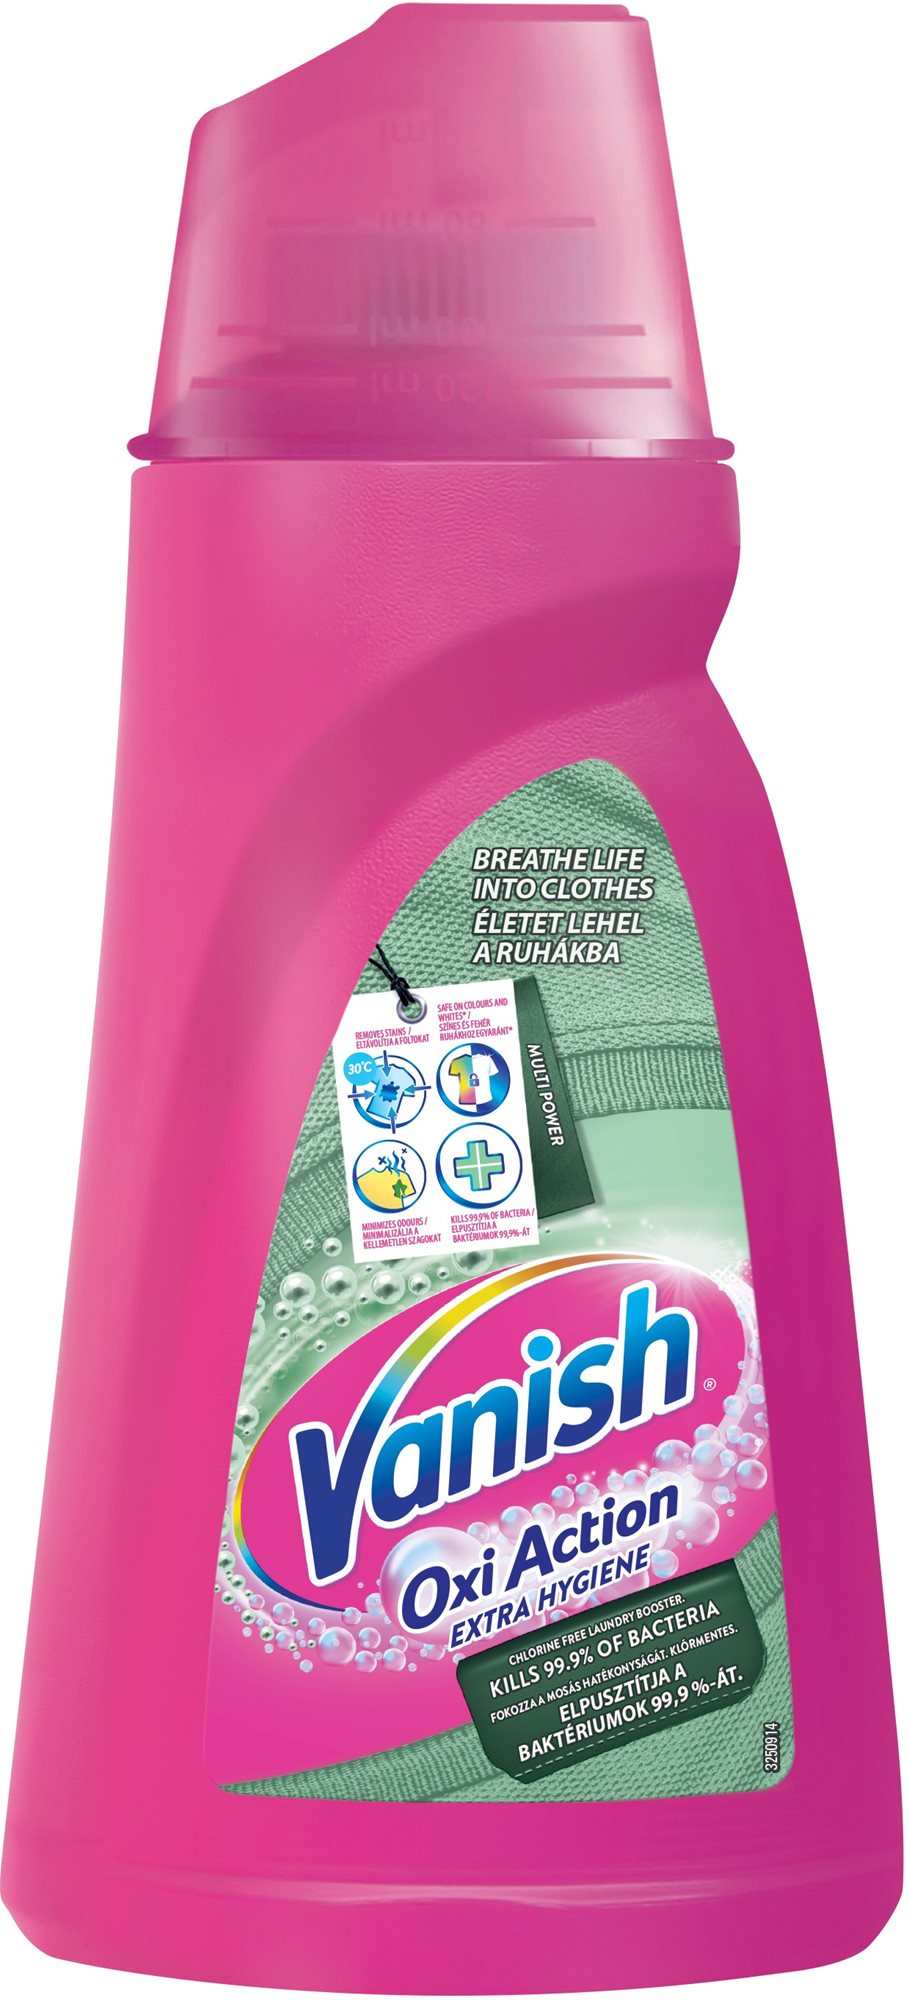 VANISH Oxi Action Extra Hygiene 940 ml